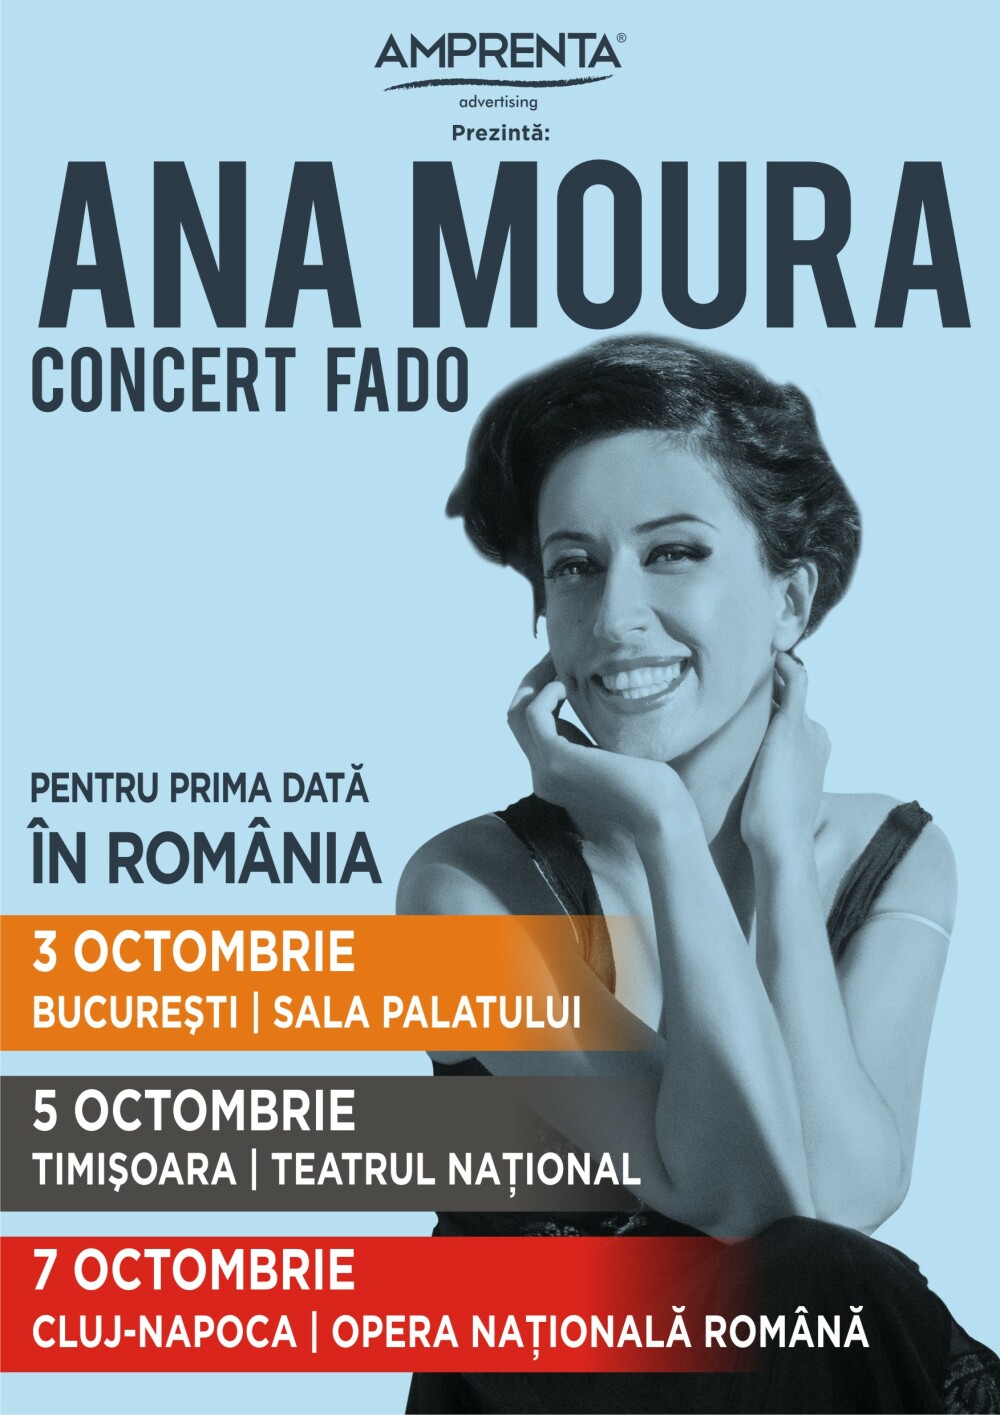 Ana Moura, cea mai cunoscuta cantareata de fado a Portugaliei va concerta sambata la Timisoara - Imaginea 1